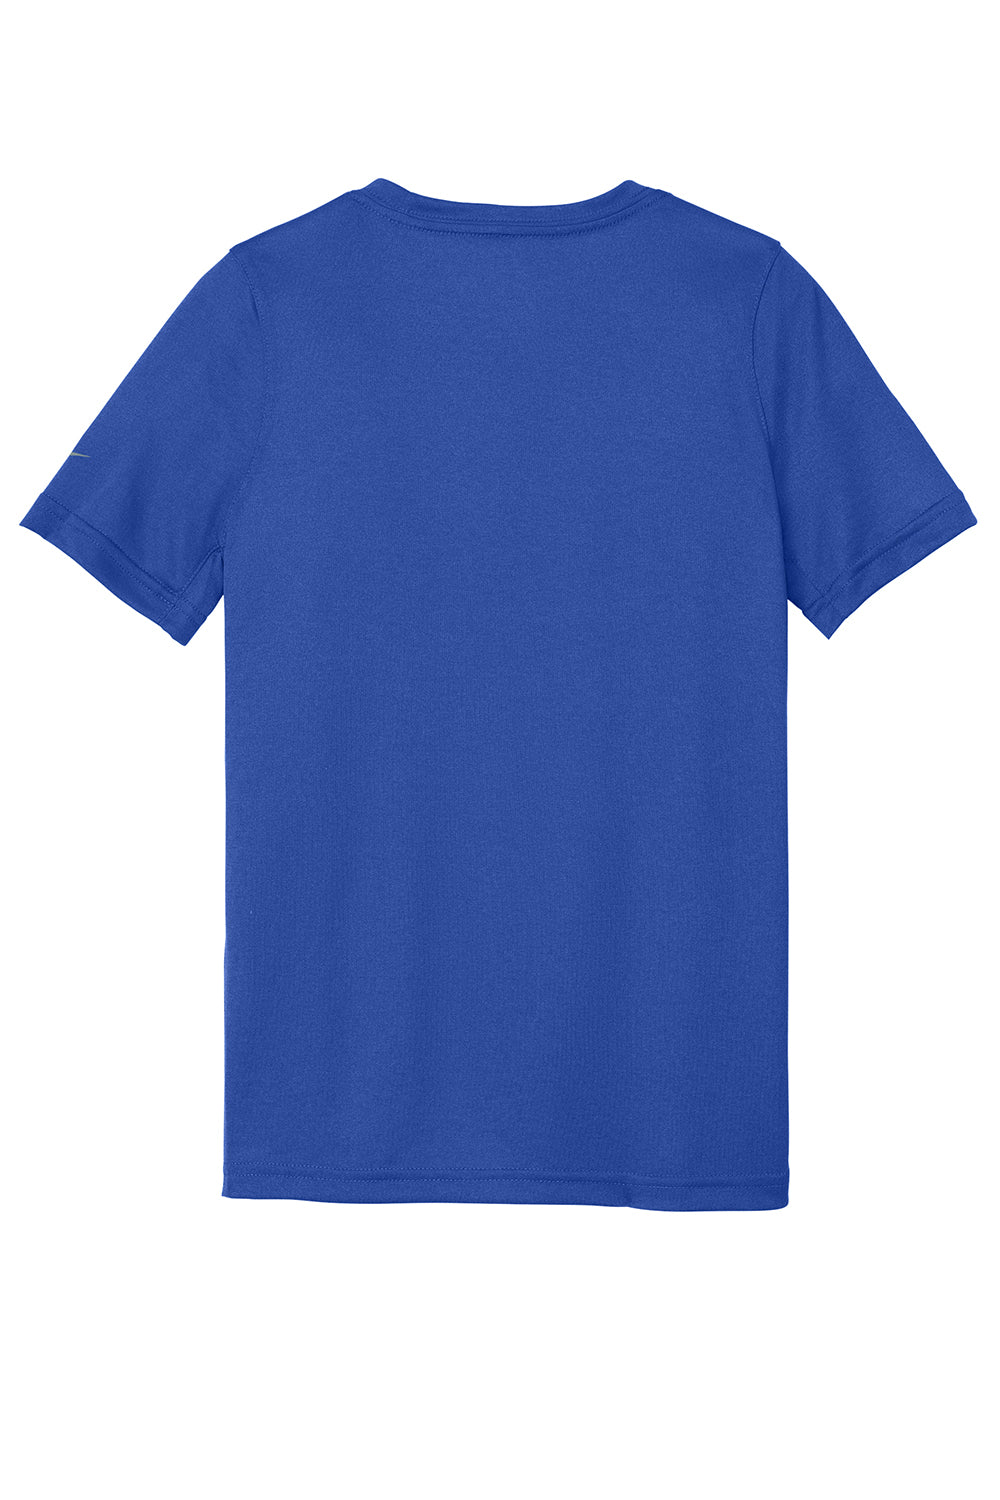 Nike NKDX8787 Youth rLegend Dri-Fit Moisture Wicking Short Sleeve Crewneck T-Shirt Game Royal Blue Flat Back